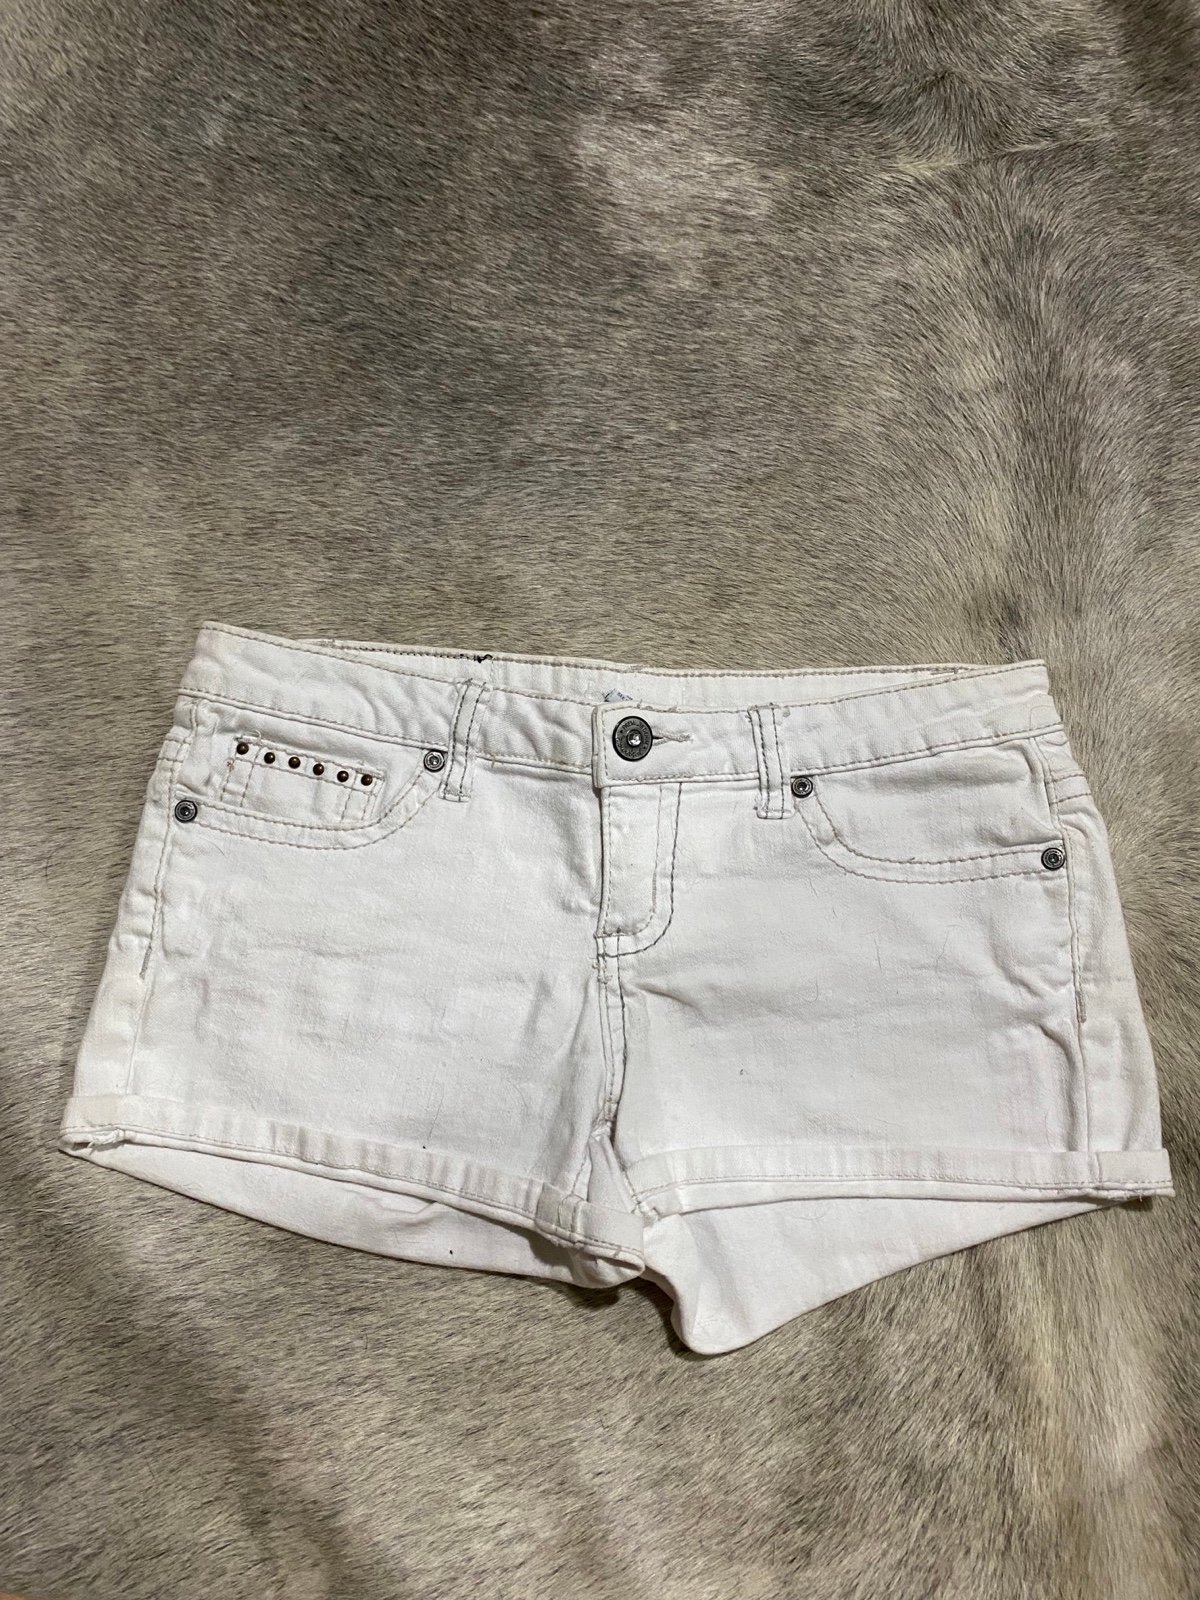 big discount Women’s white shorts size 7 M0SDLi9kf Fact